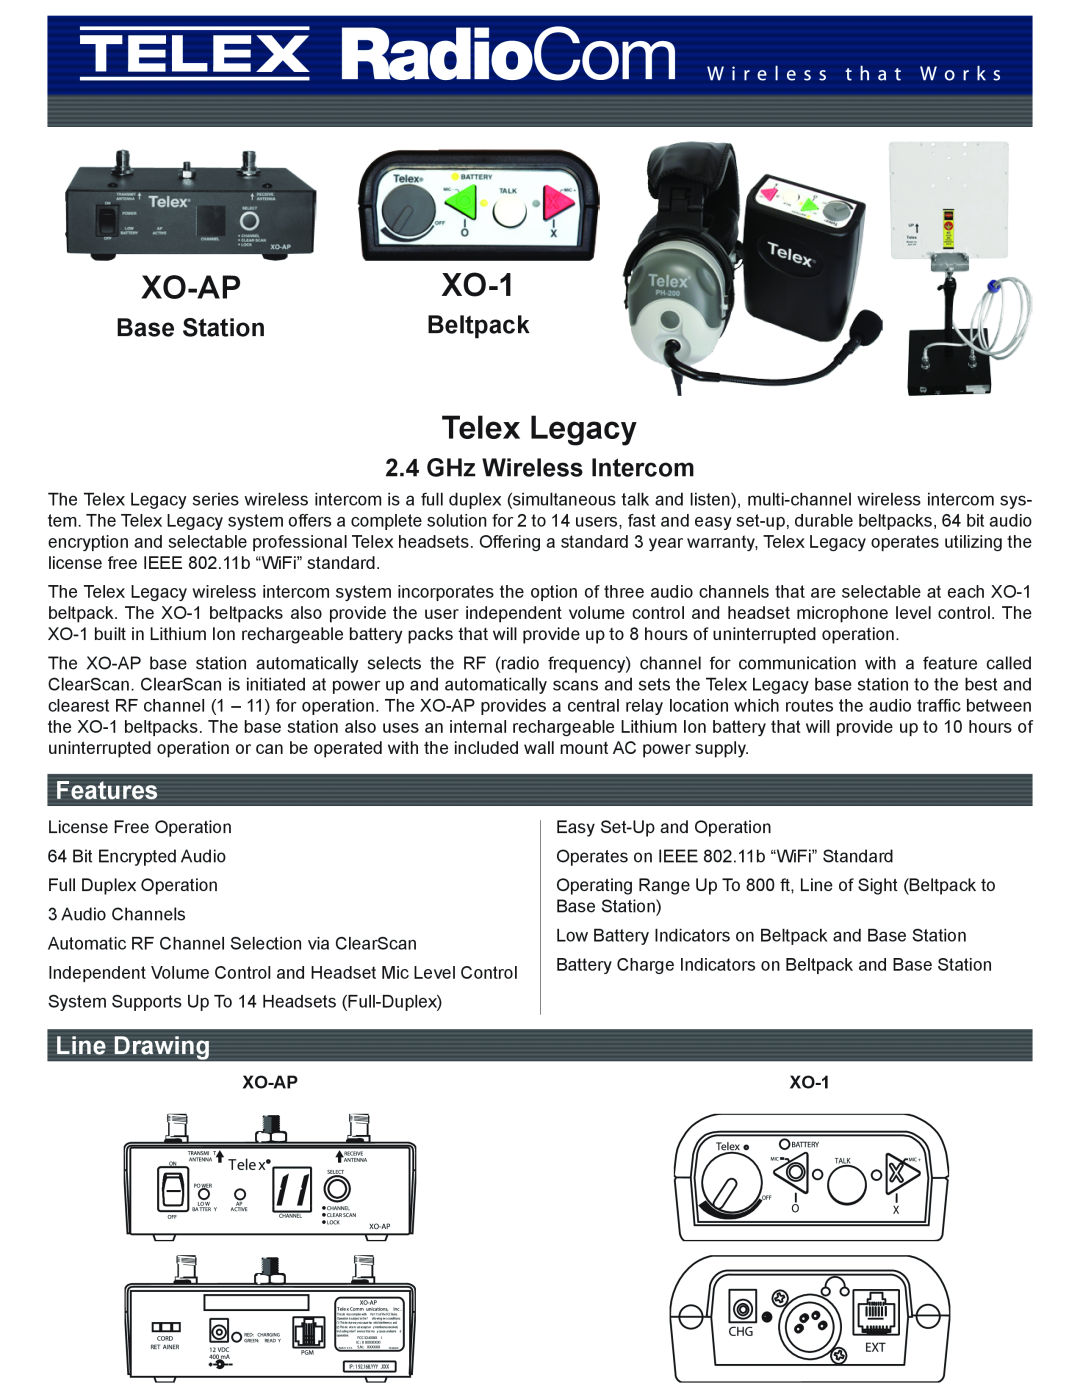 Telex XO-AP warranty Xo-Ap, XO-1, Telex Legacy, GHz Wireless Intercom, Features, Line Drawing, Base Station, Beltpack 